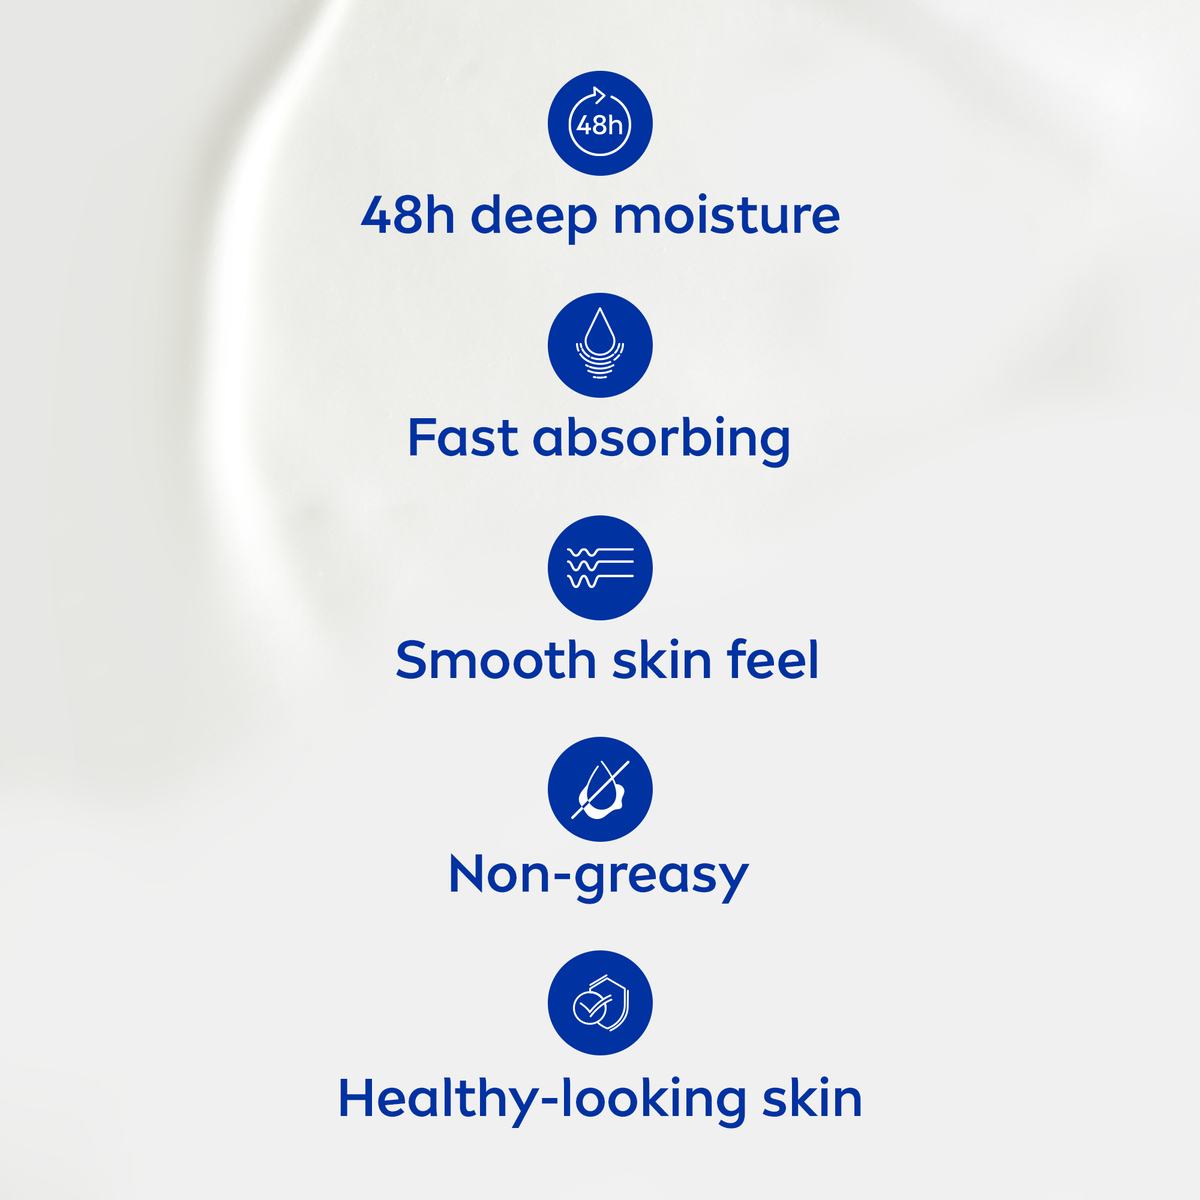 Nivea Body Lotion Express Hydration Normal & Dry Skin 250 ml